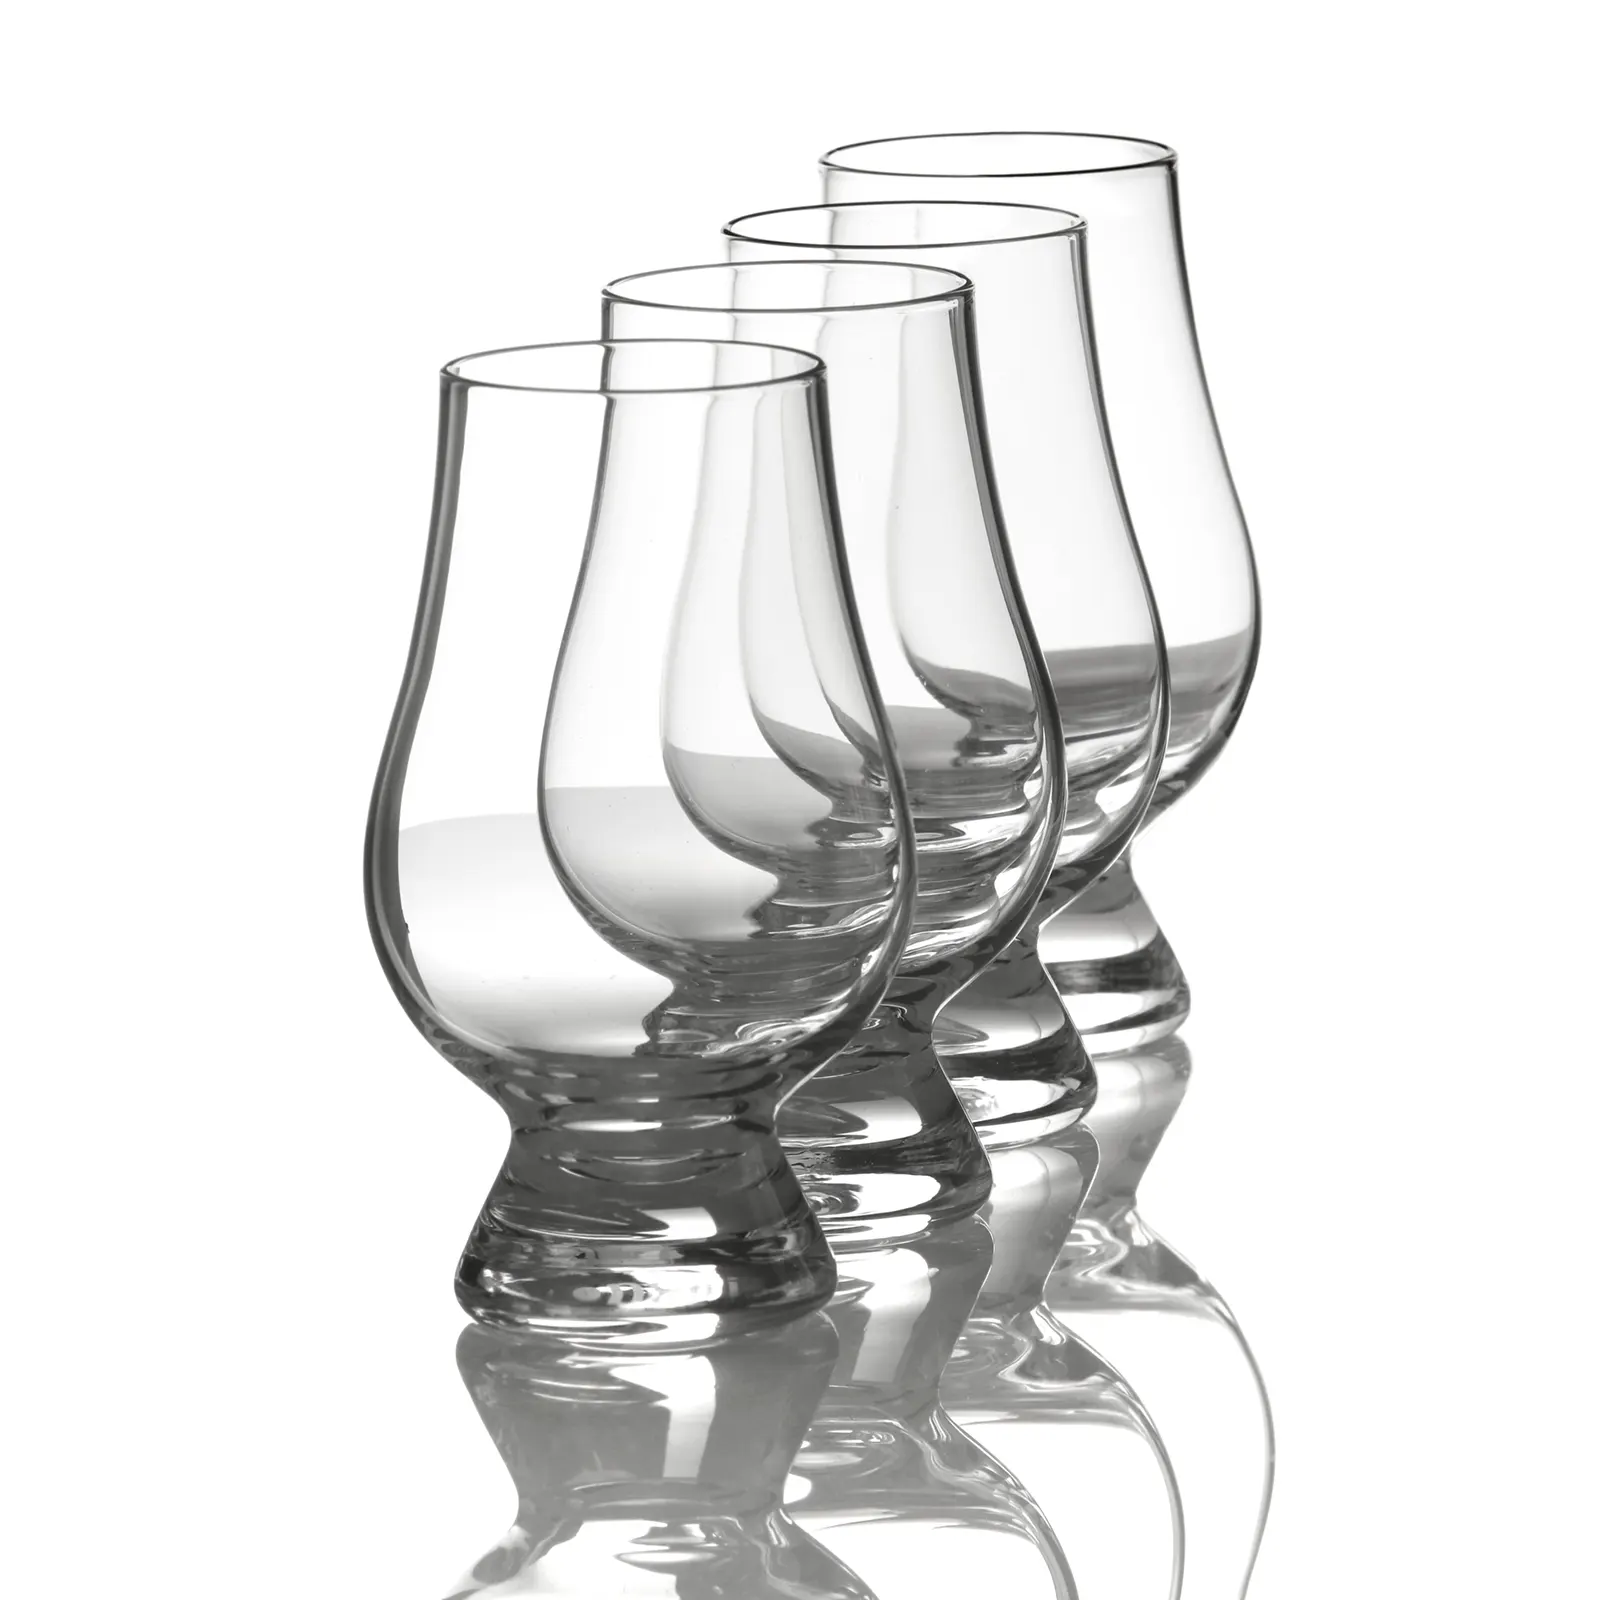 4 x Glencairn Whisky Tasting Glas - 4er Set in Geschenkbox